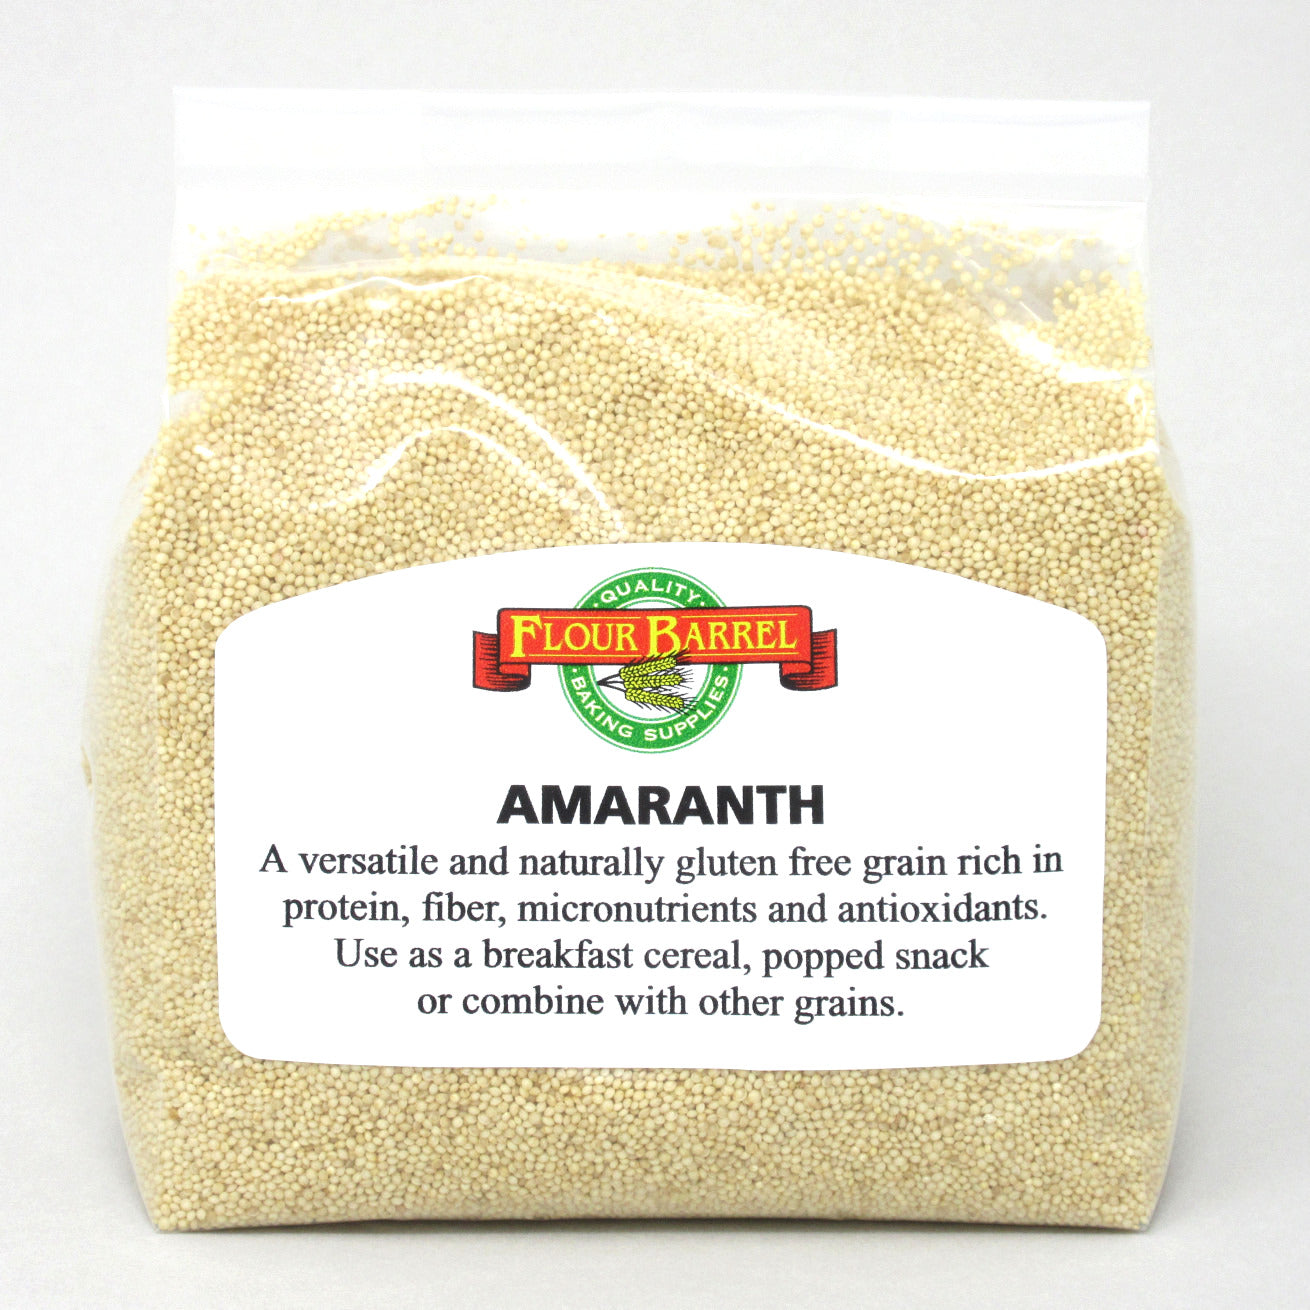 Flour Barrel product image - Amaranth